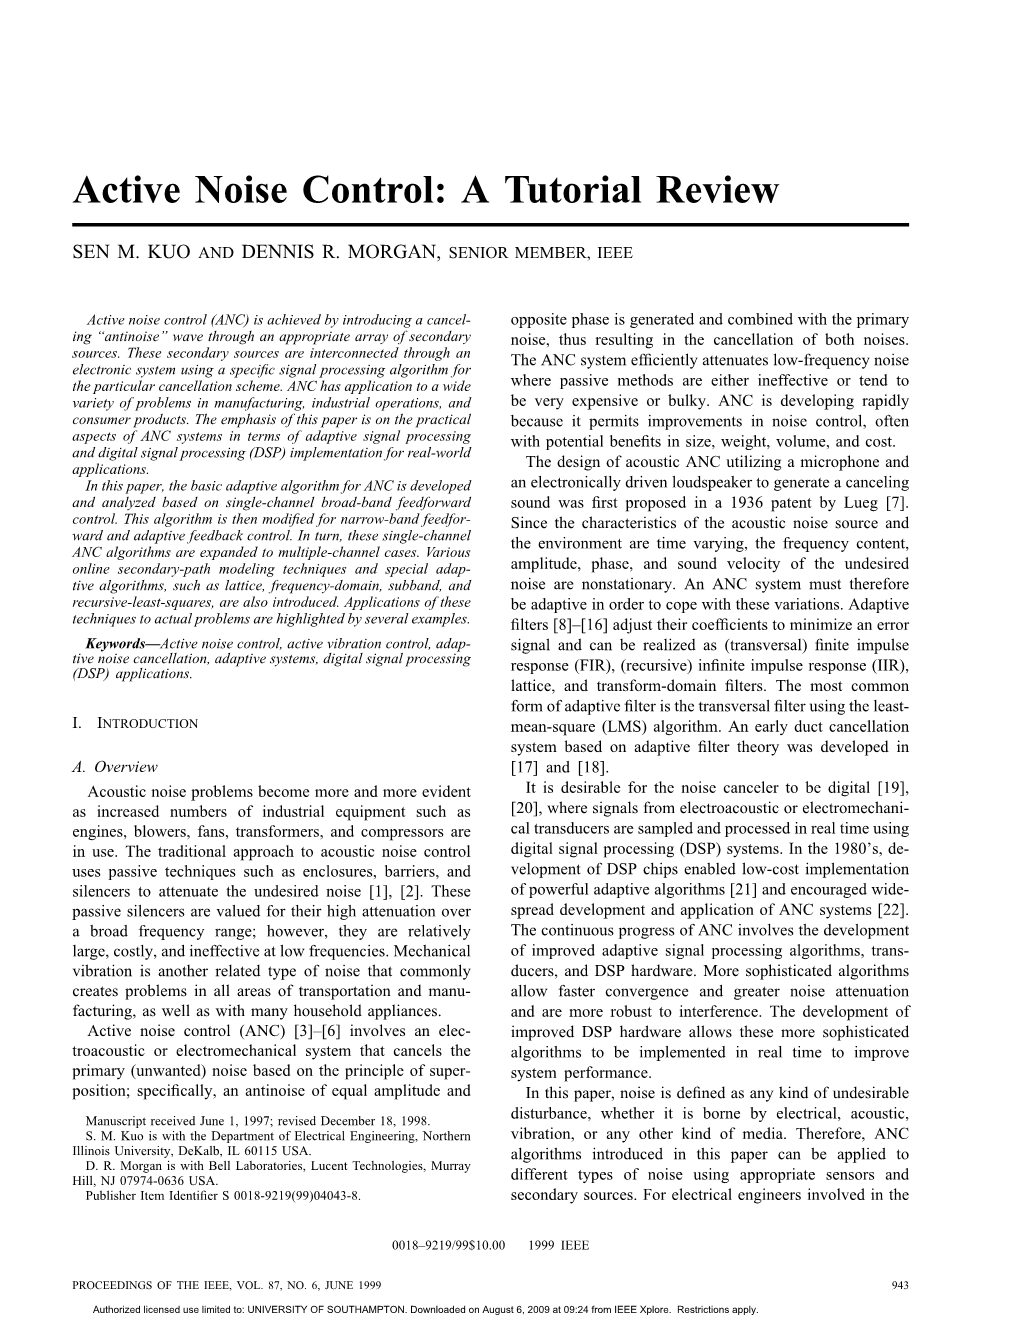 Active Noise Control: a Tutorial Review